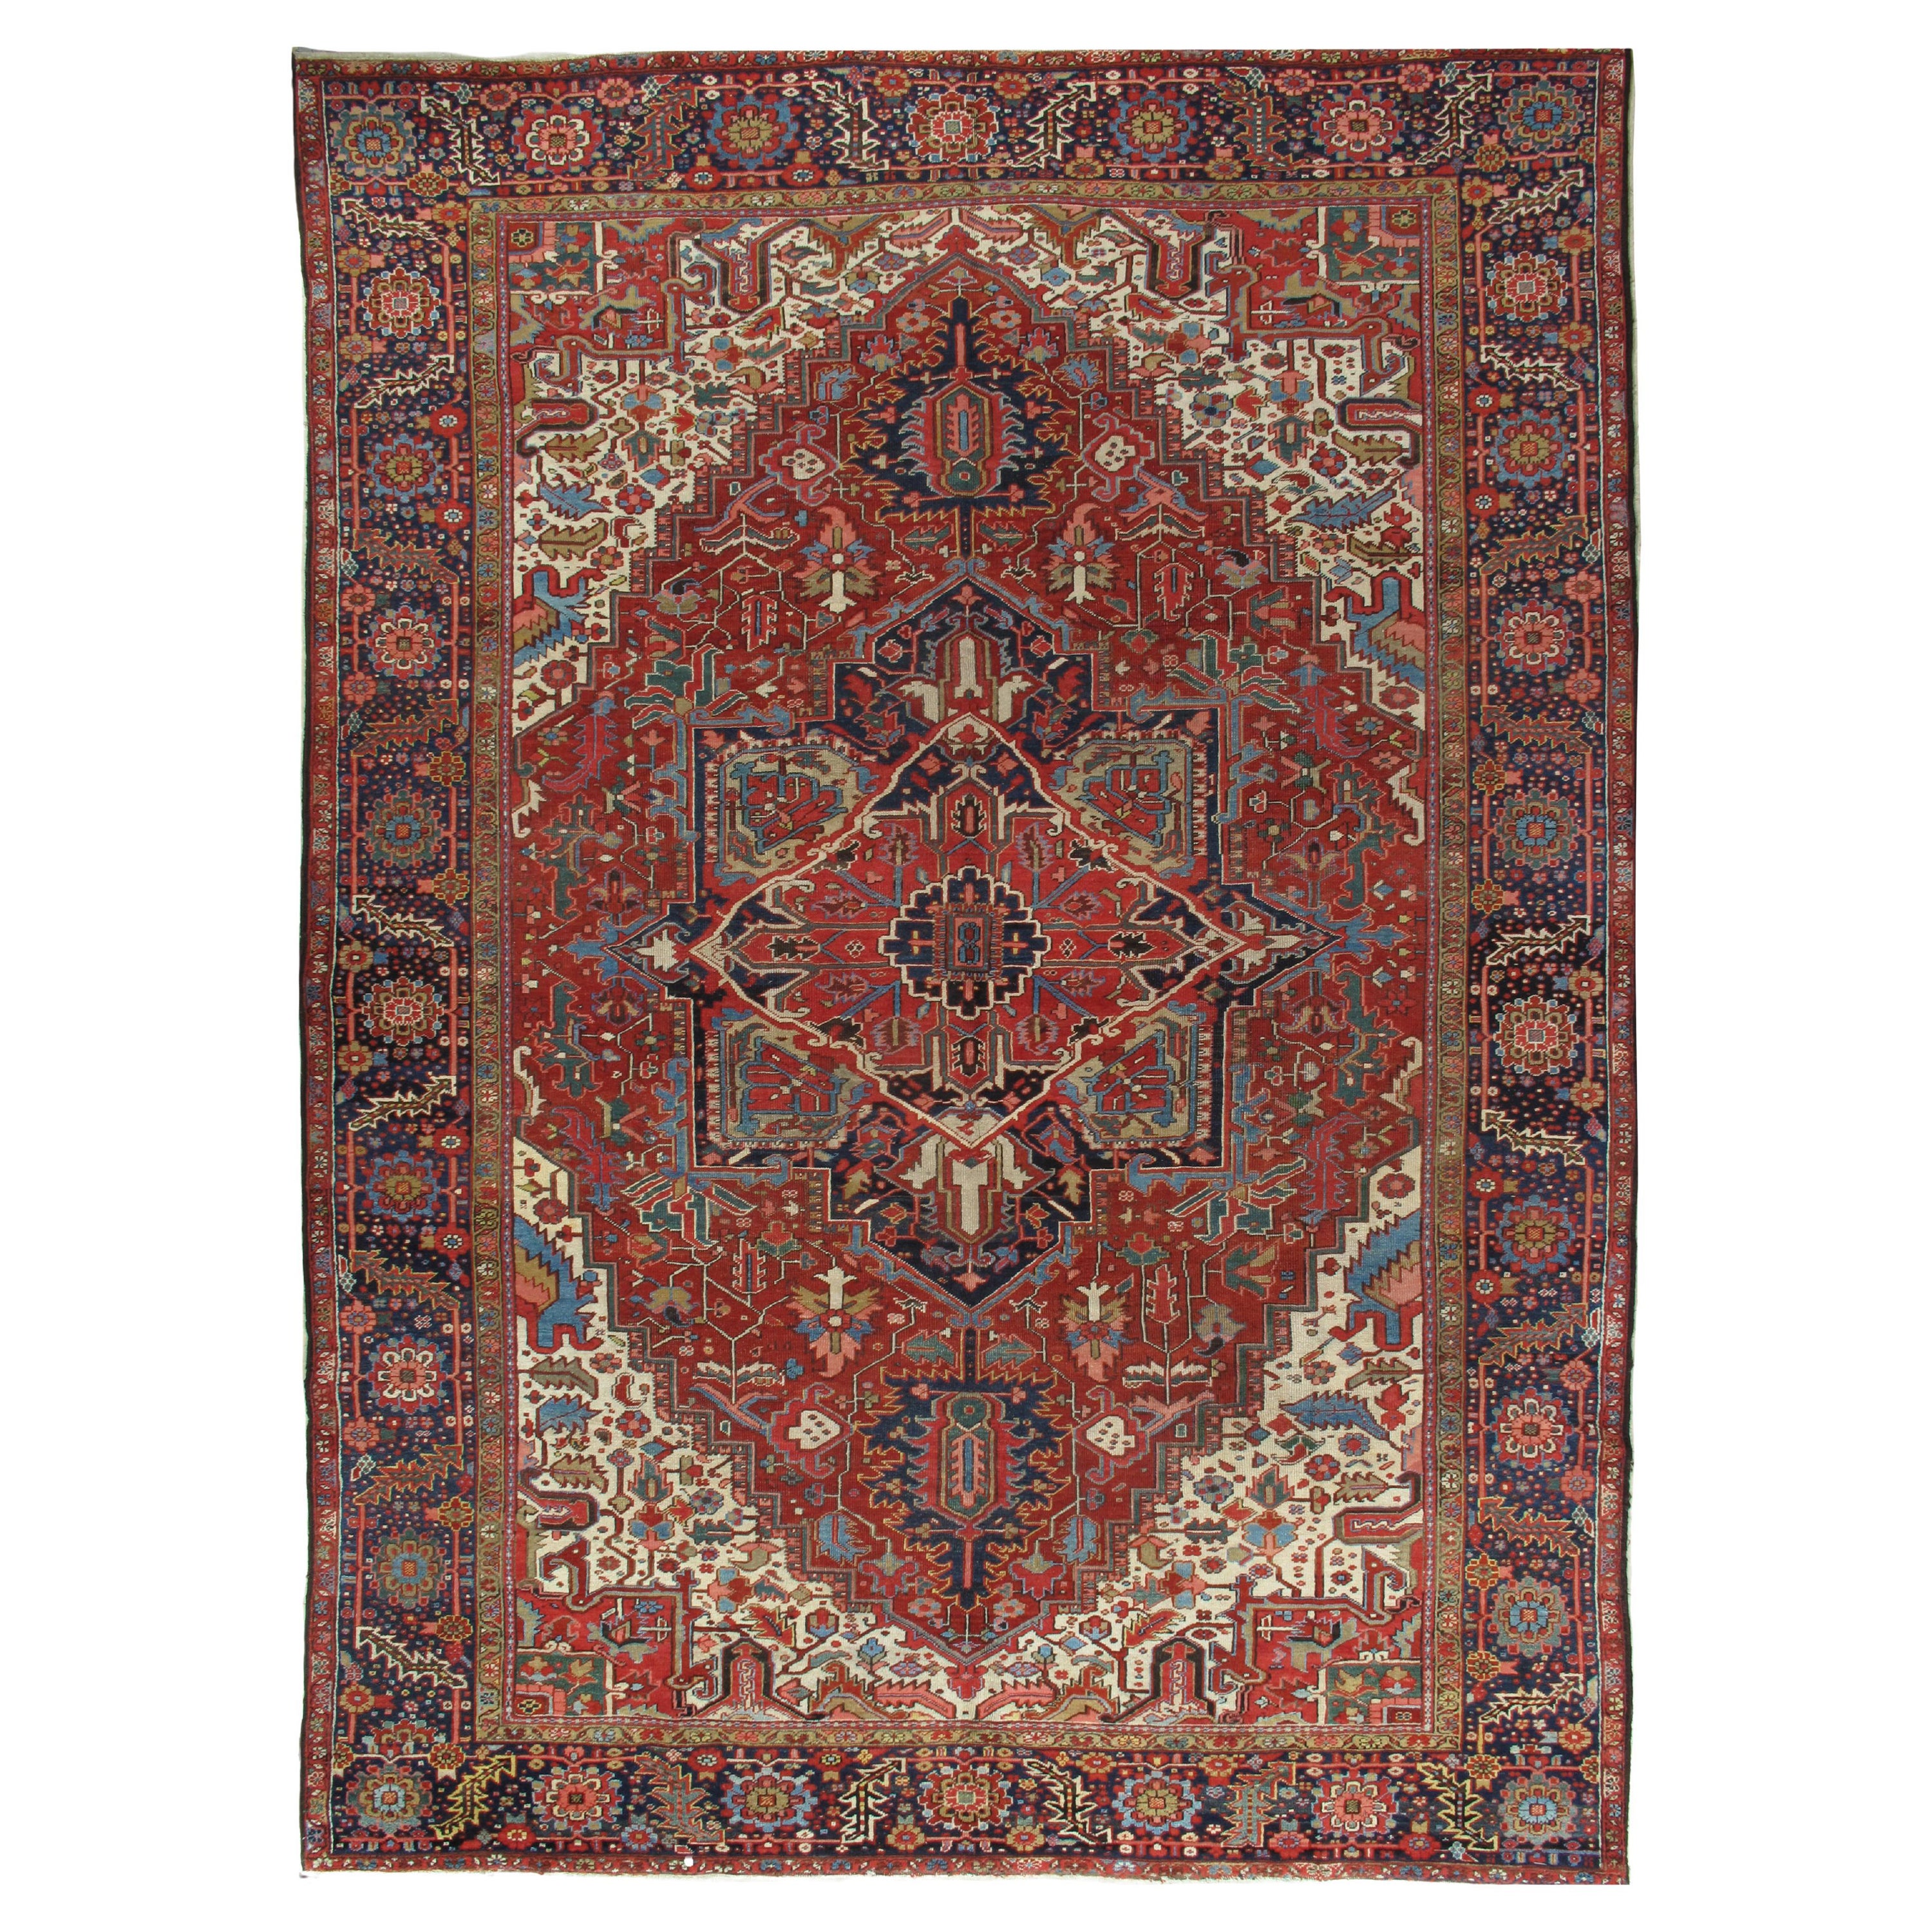 Antique Persian Heriz Carpet, Handmade Wool Oriental Rug, Rust, Navy, Lt Blue For Sale